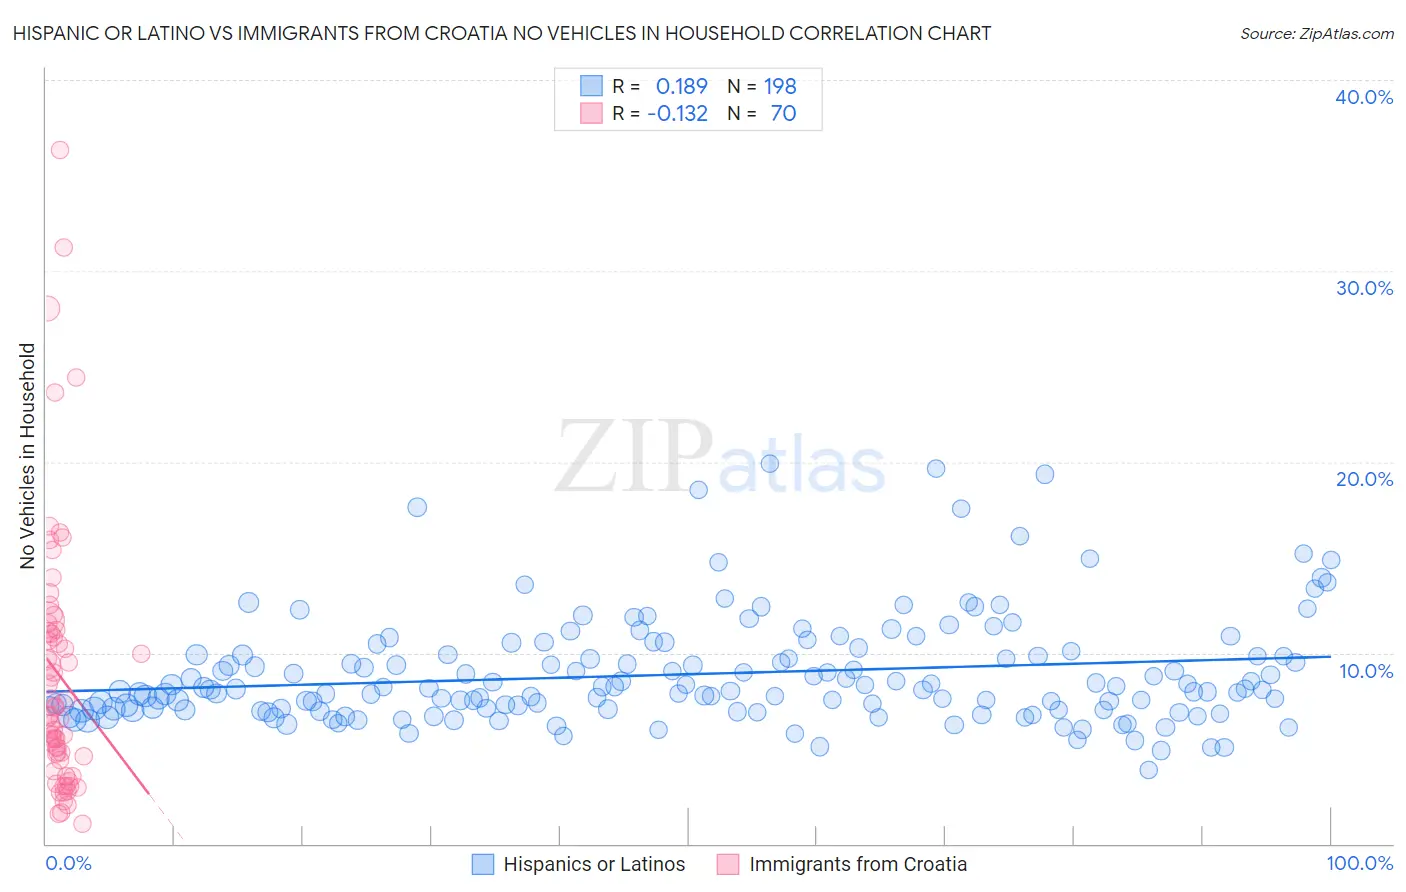 Hispanic or Latino vs Immigrants from Croatia No Vehicles in Household